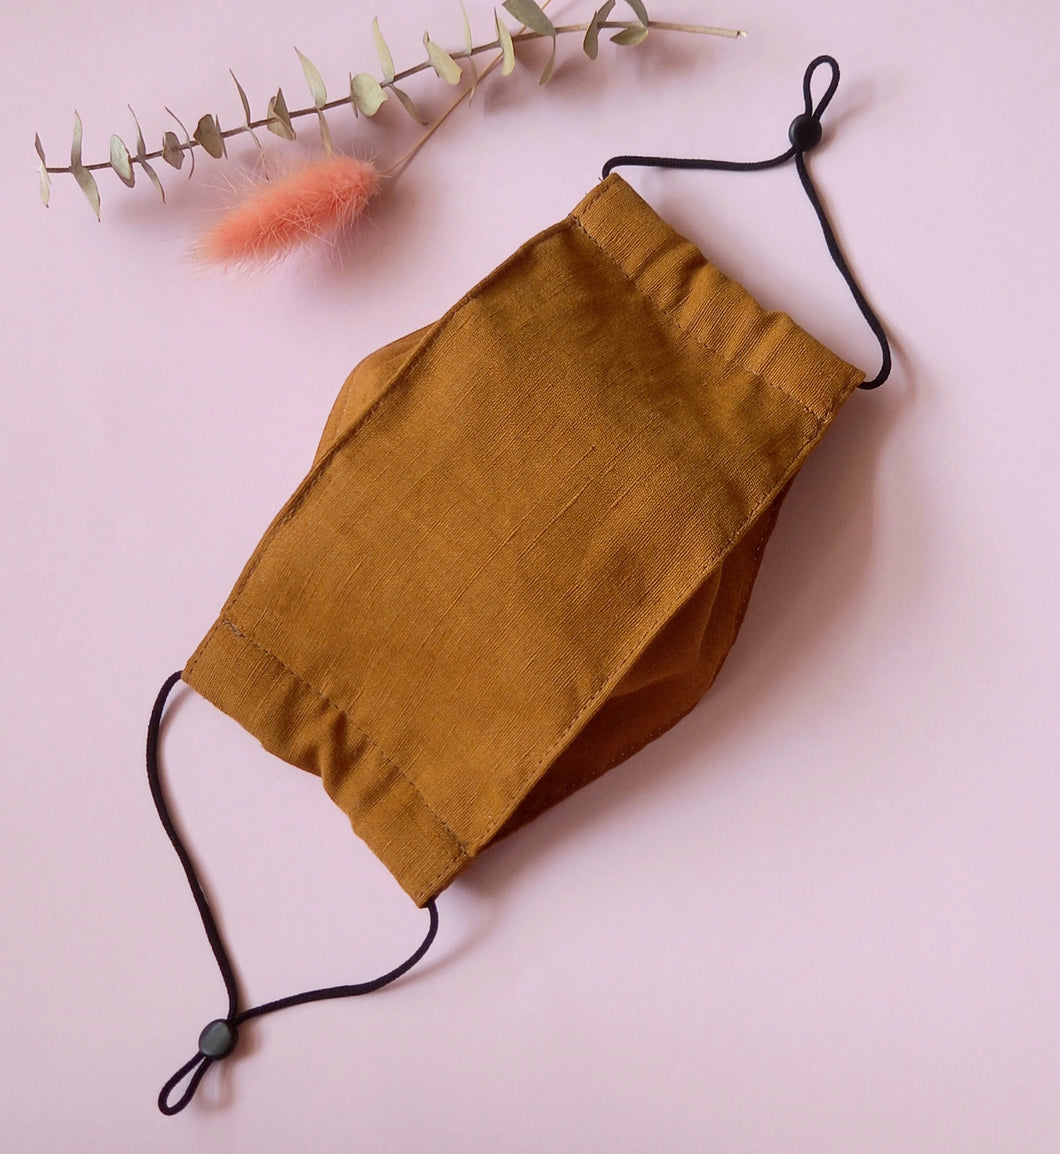 Reusable Fabric Mask / Mustard Linen with Filter Pocket, Adjustable Straps